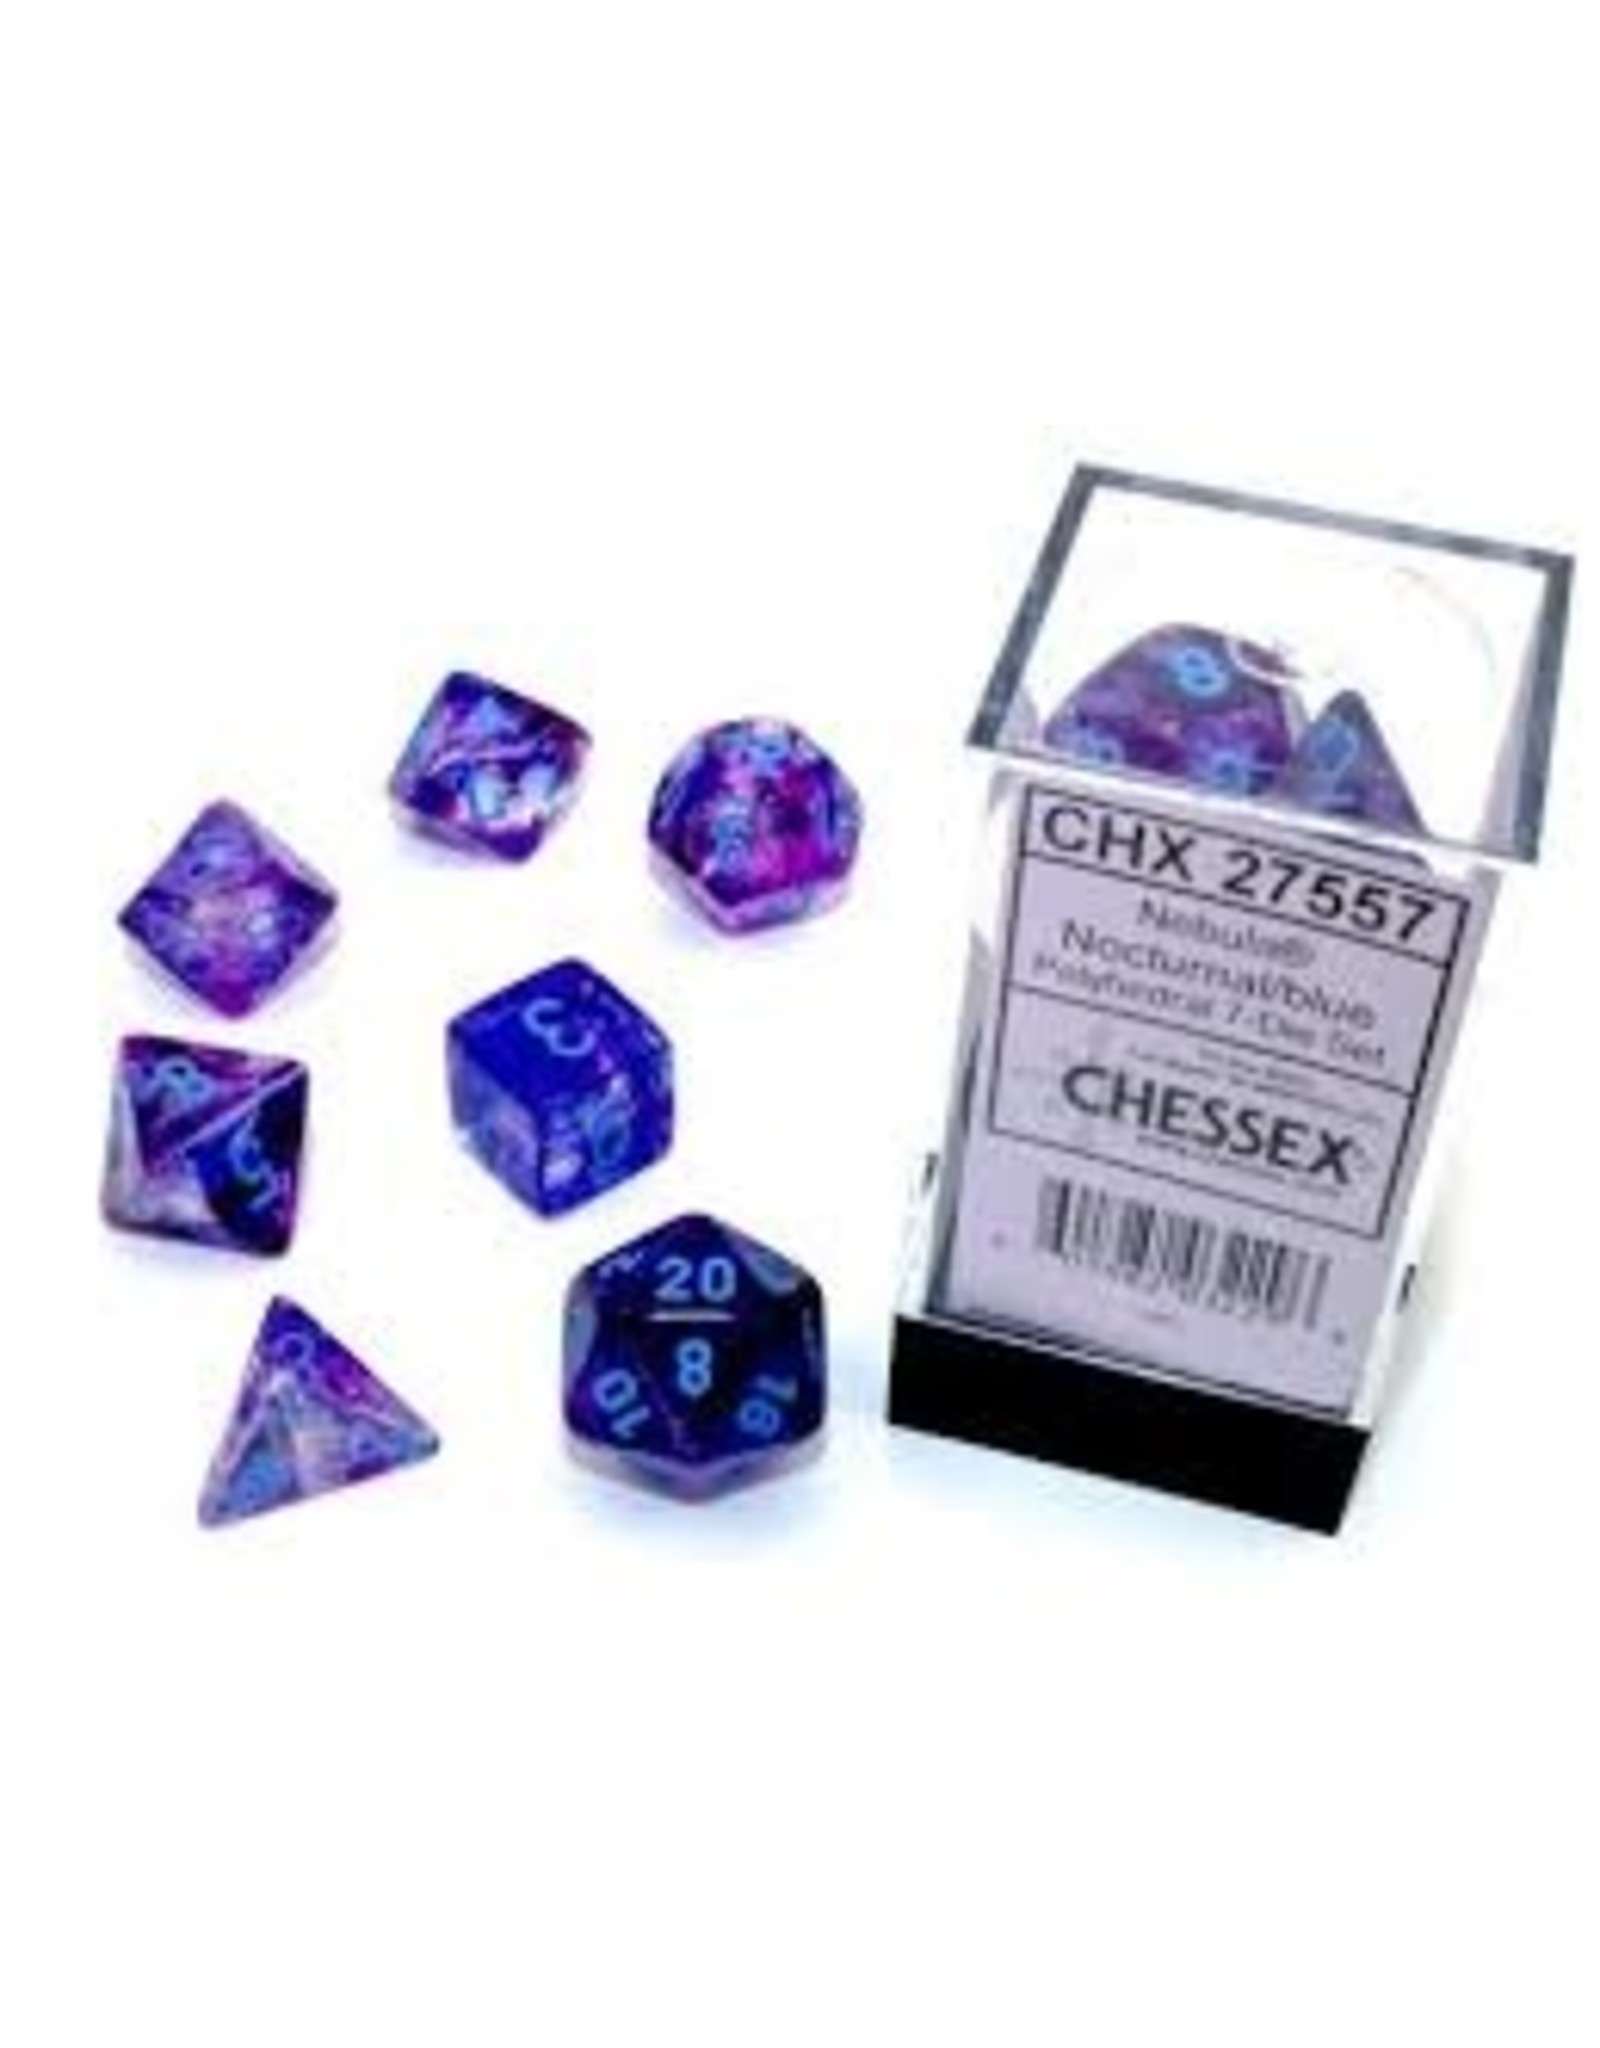 Chessex 7-Set Cube Luminary Nebula Nocturnal with Blue